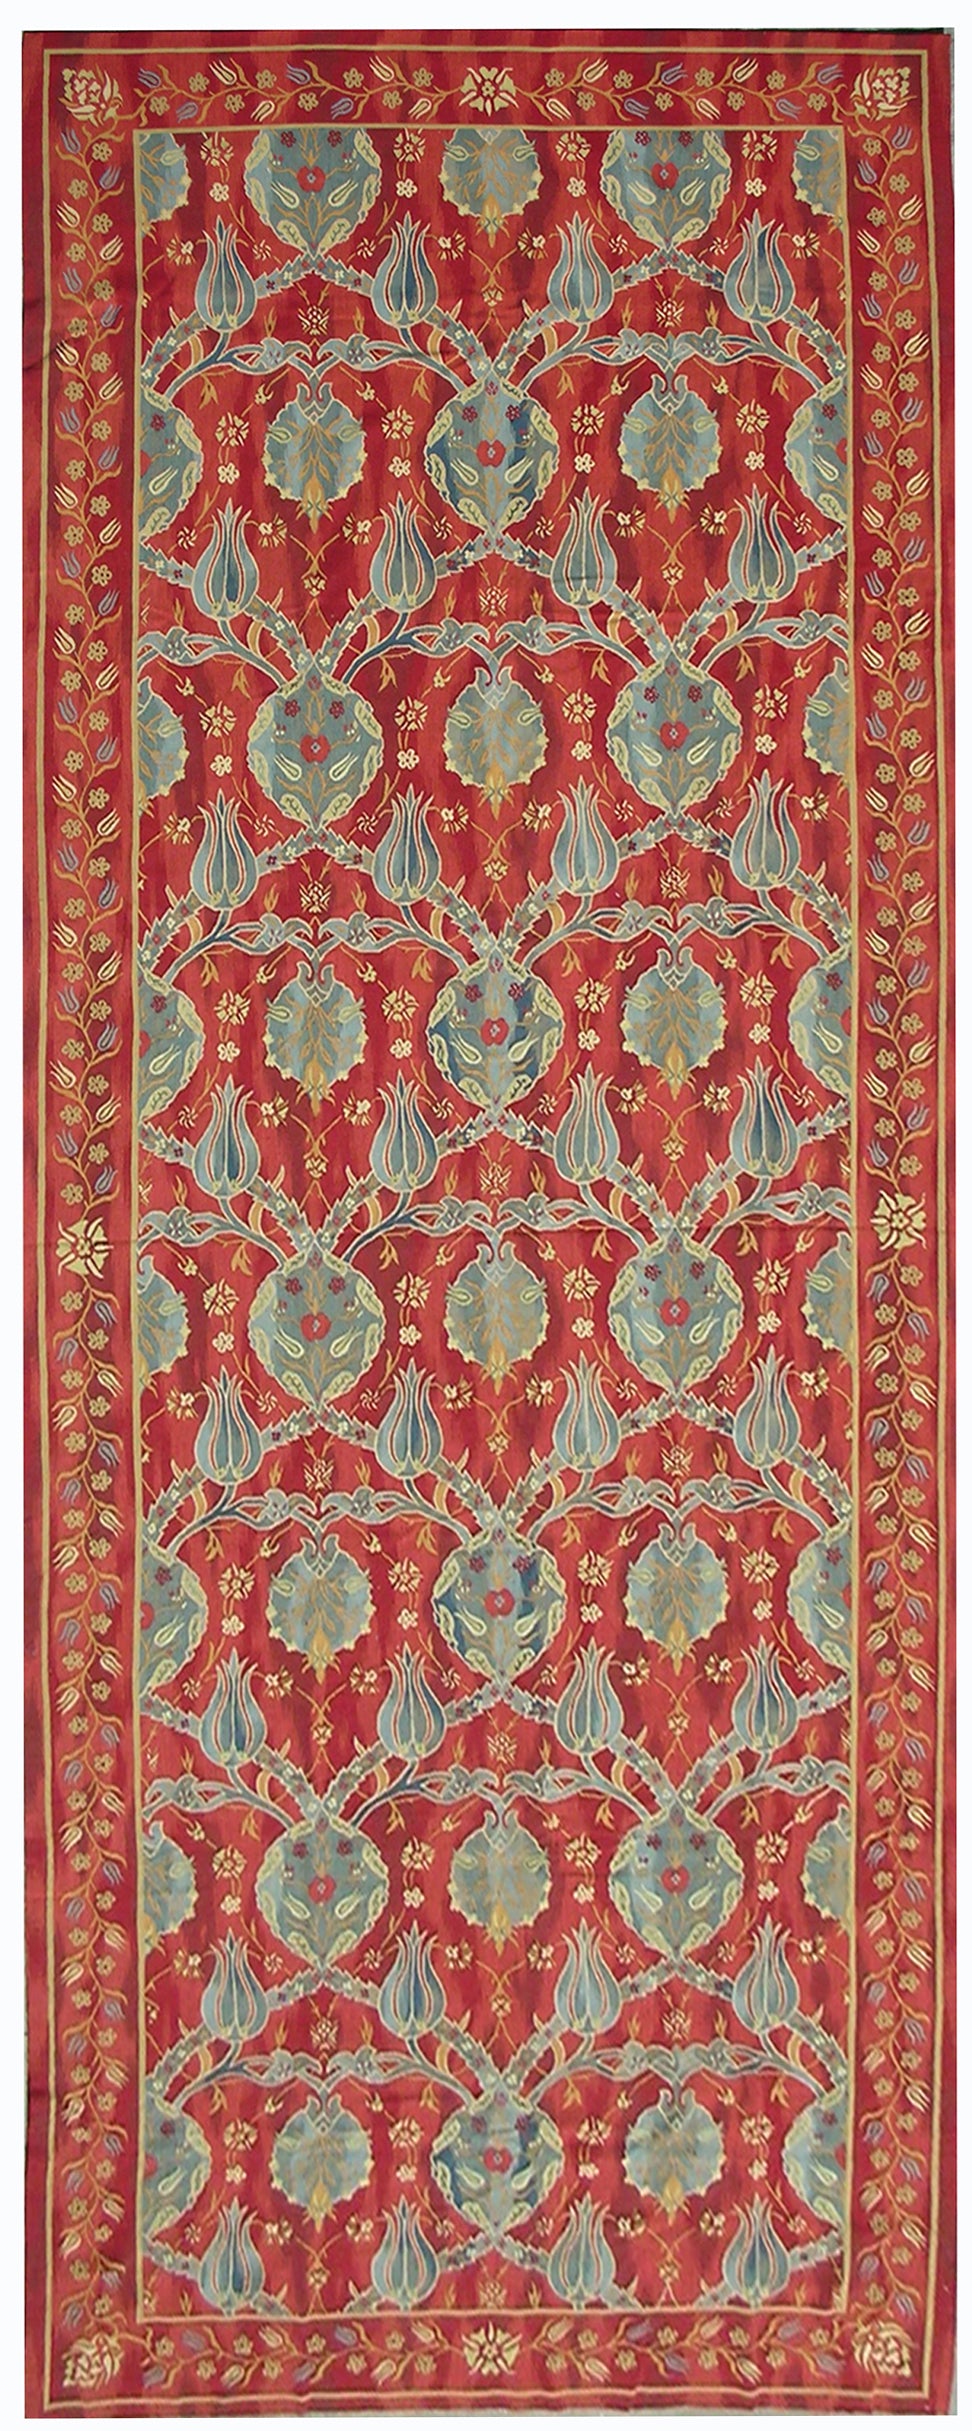 6x18 Red Ottoman Design Aubusson Weave Area Rug